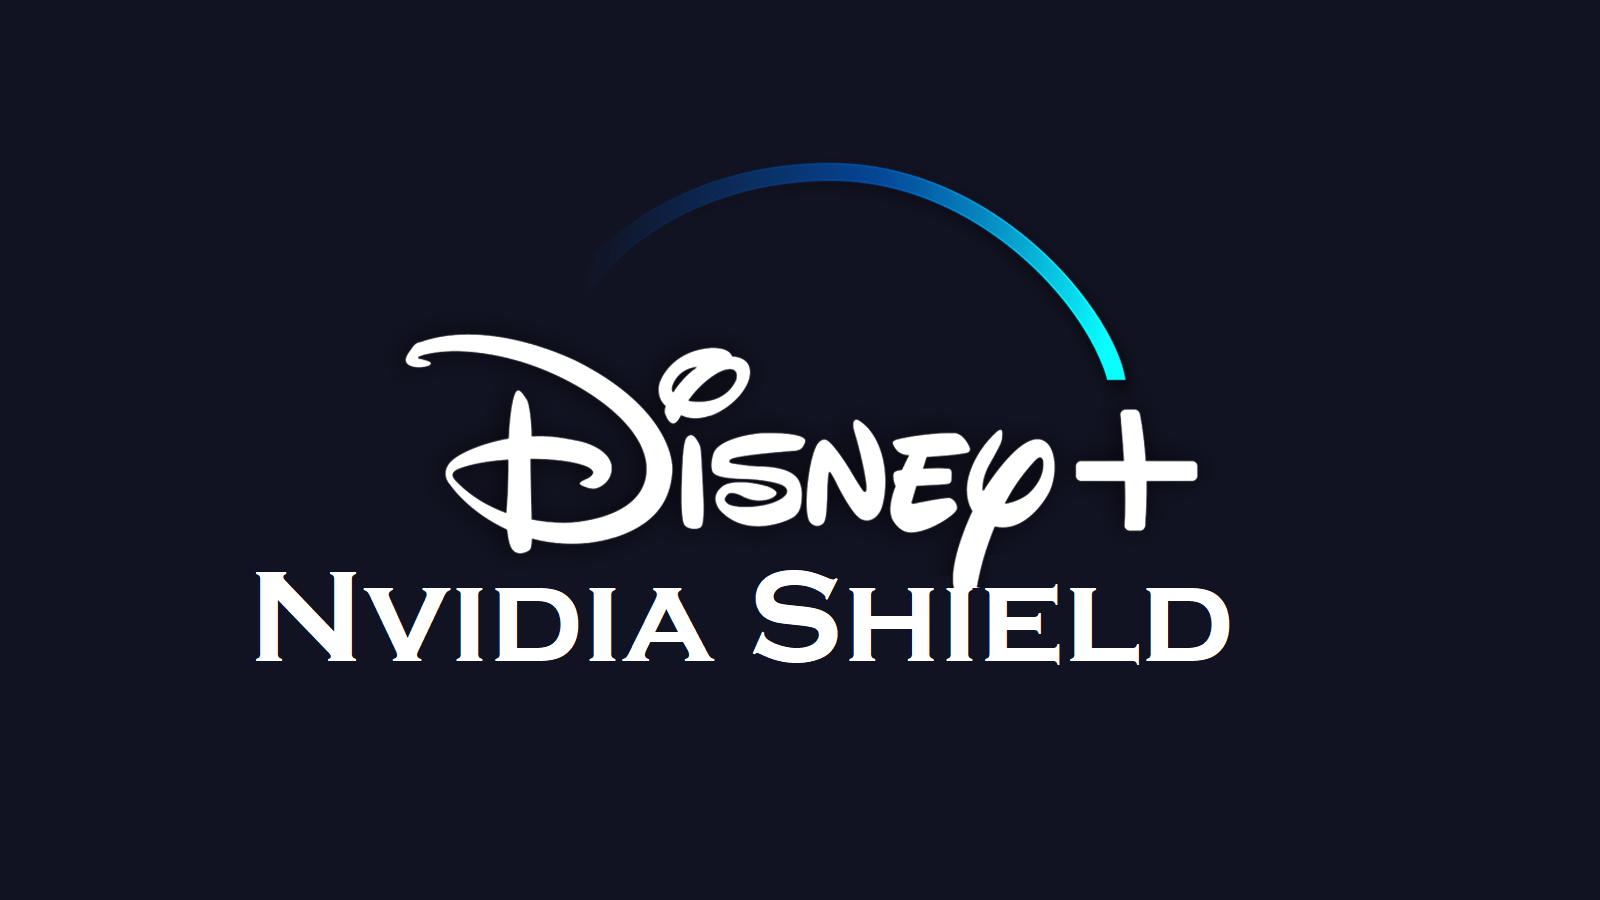 Nola lortu Disney Plus Nvidia Shield-en [2 Working Methods]
